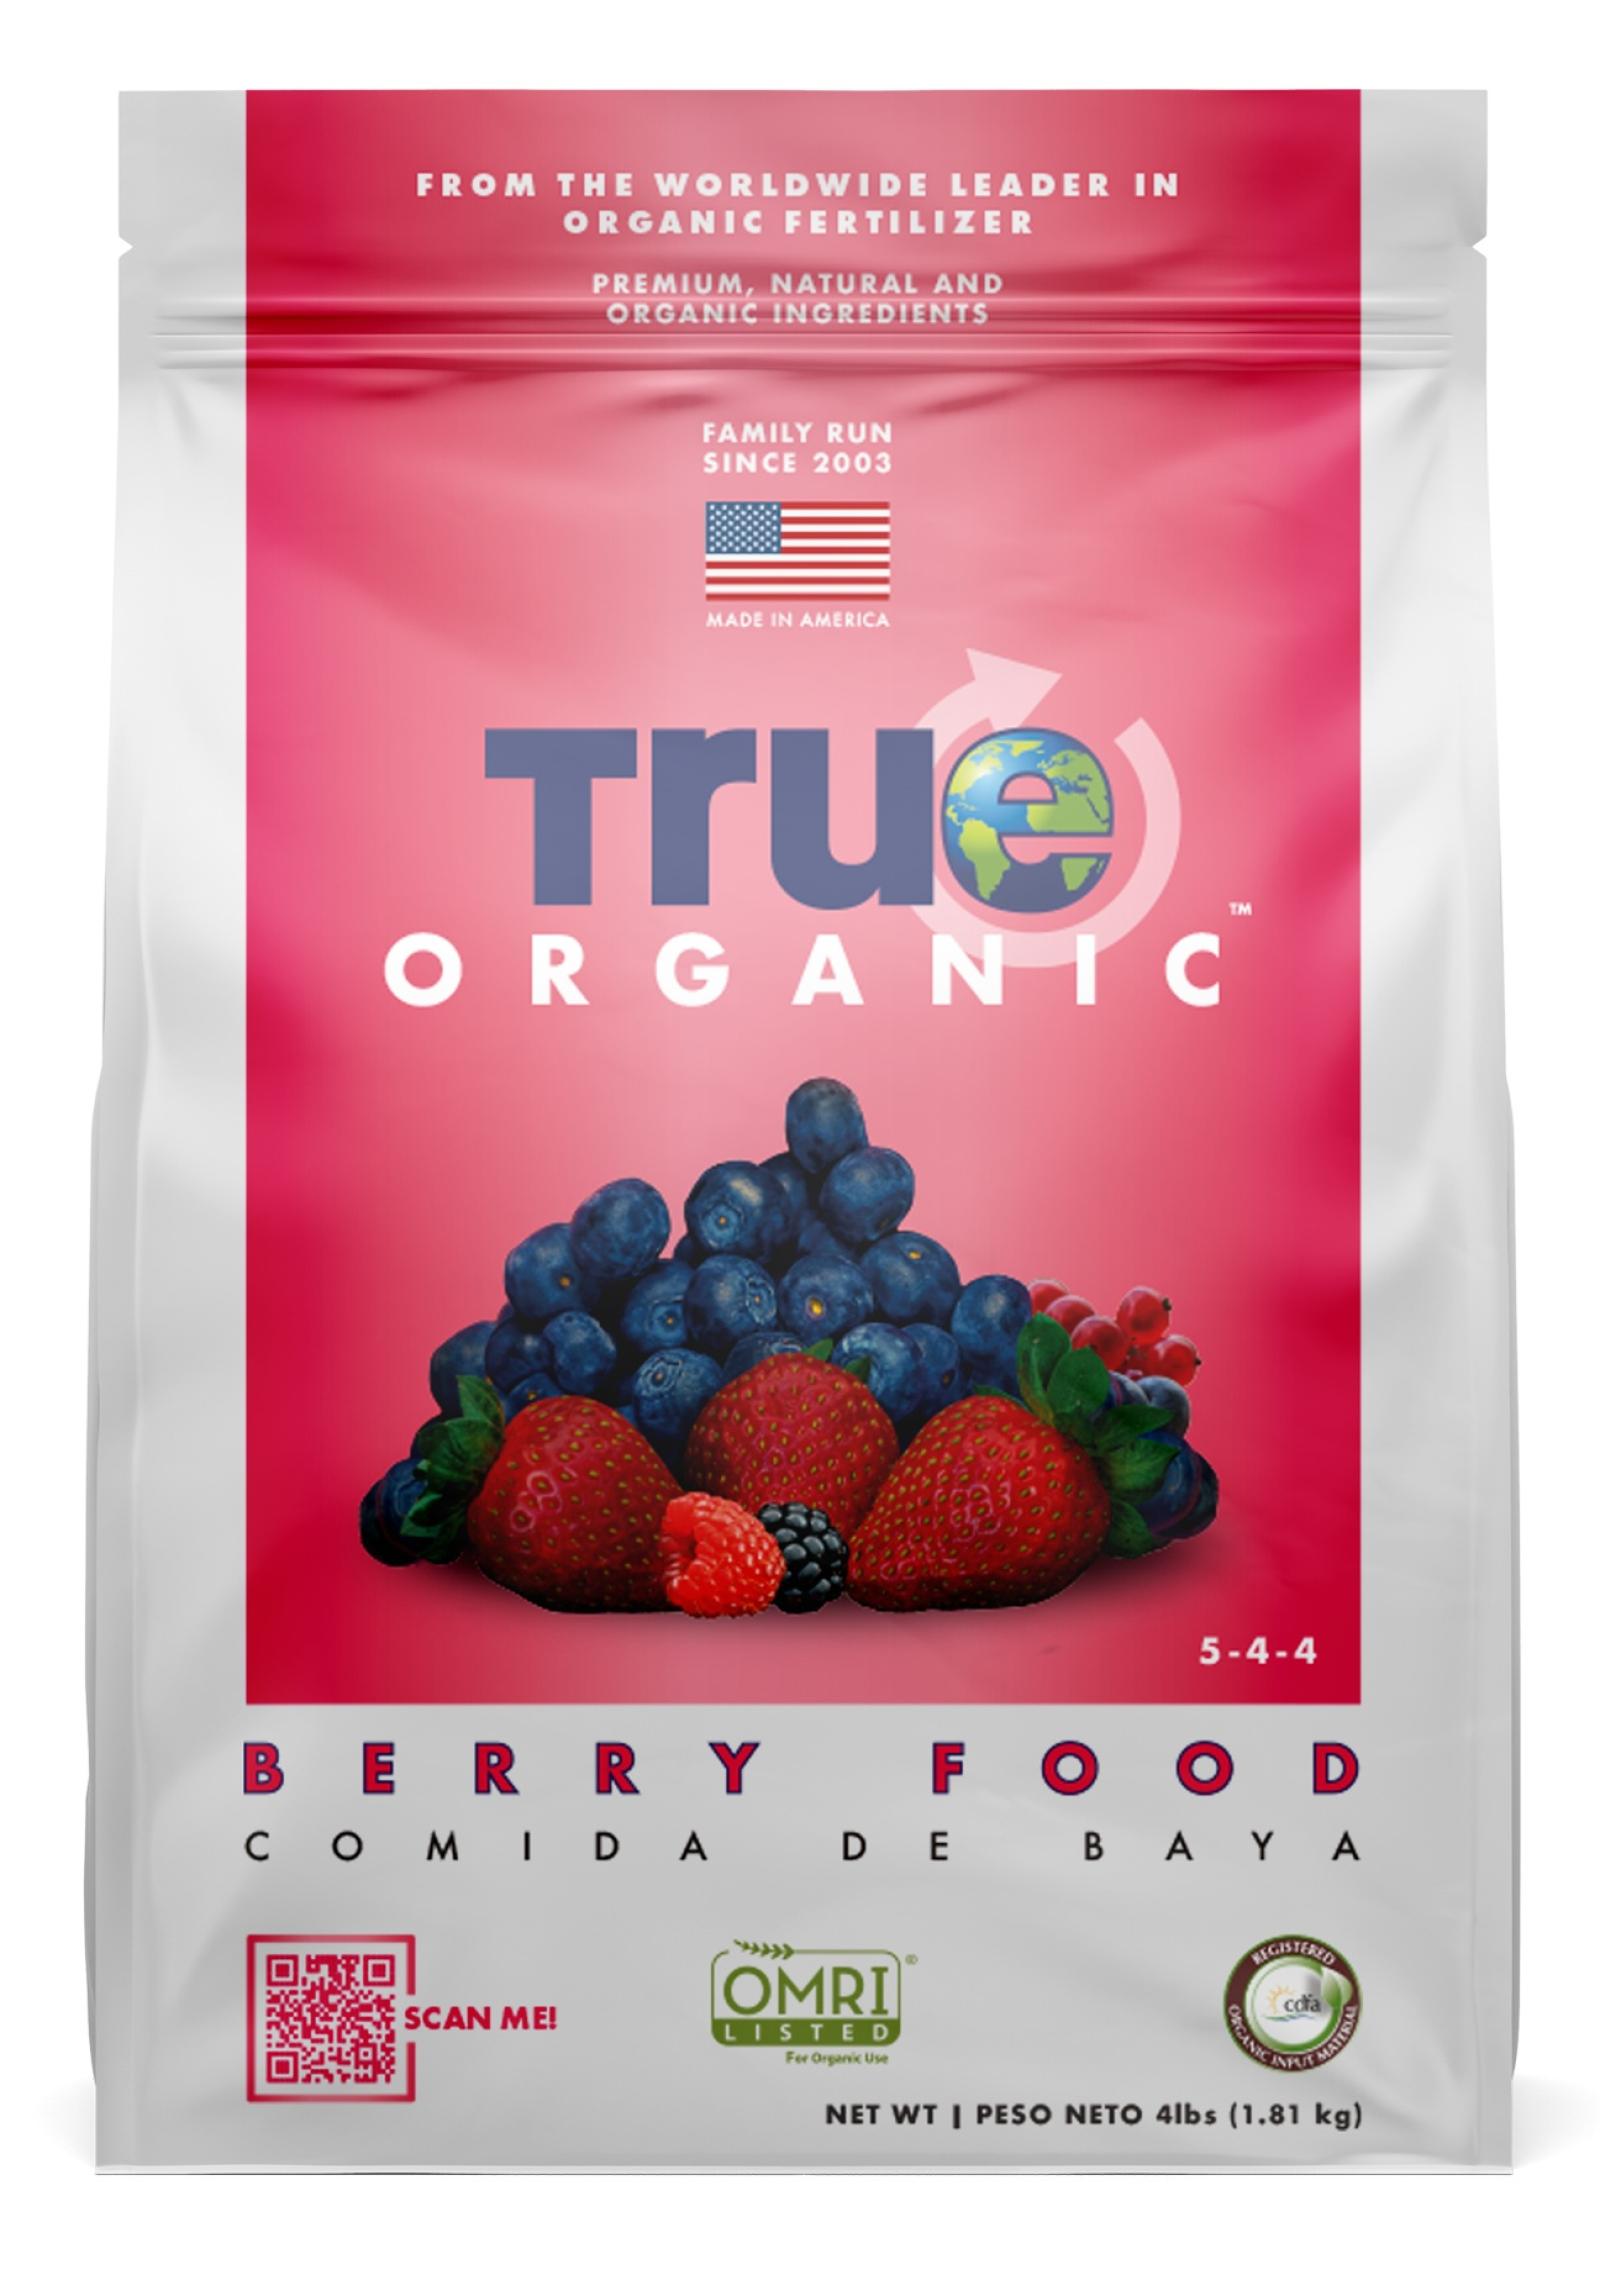 True Organic Berry Food